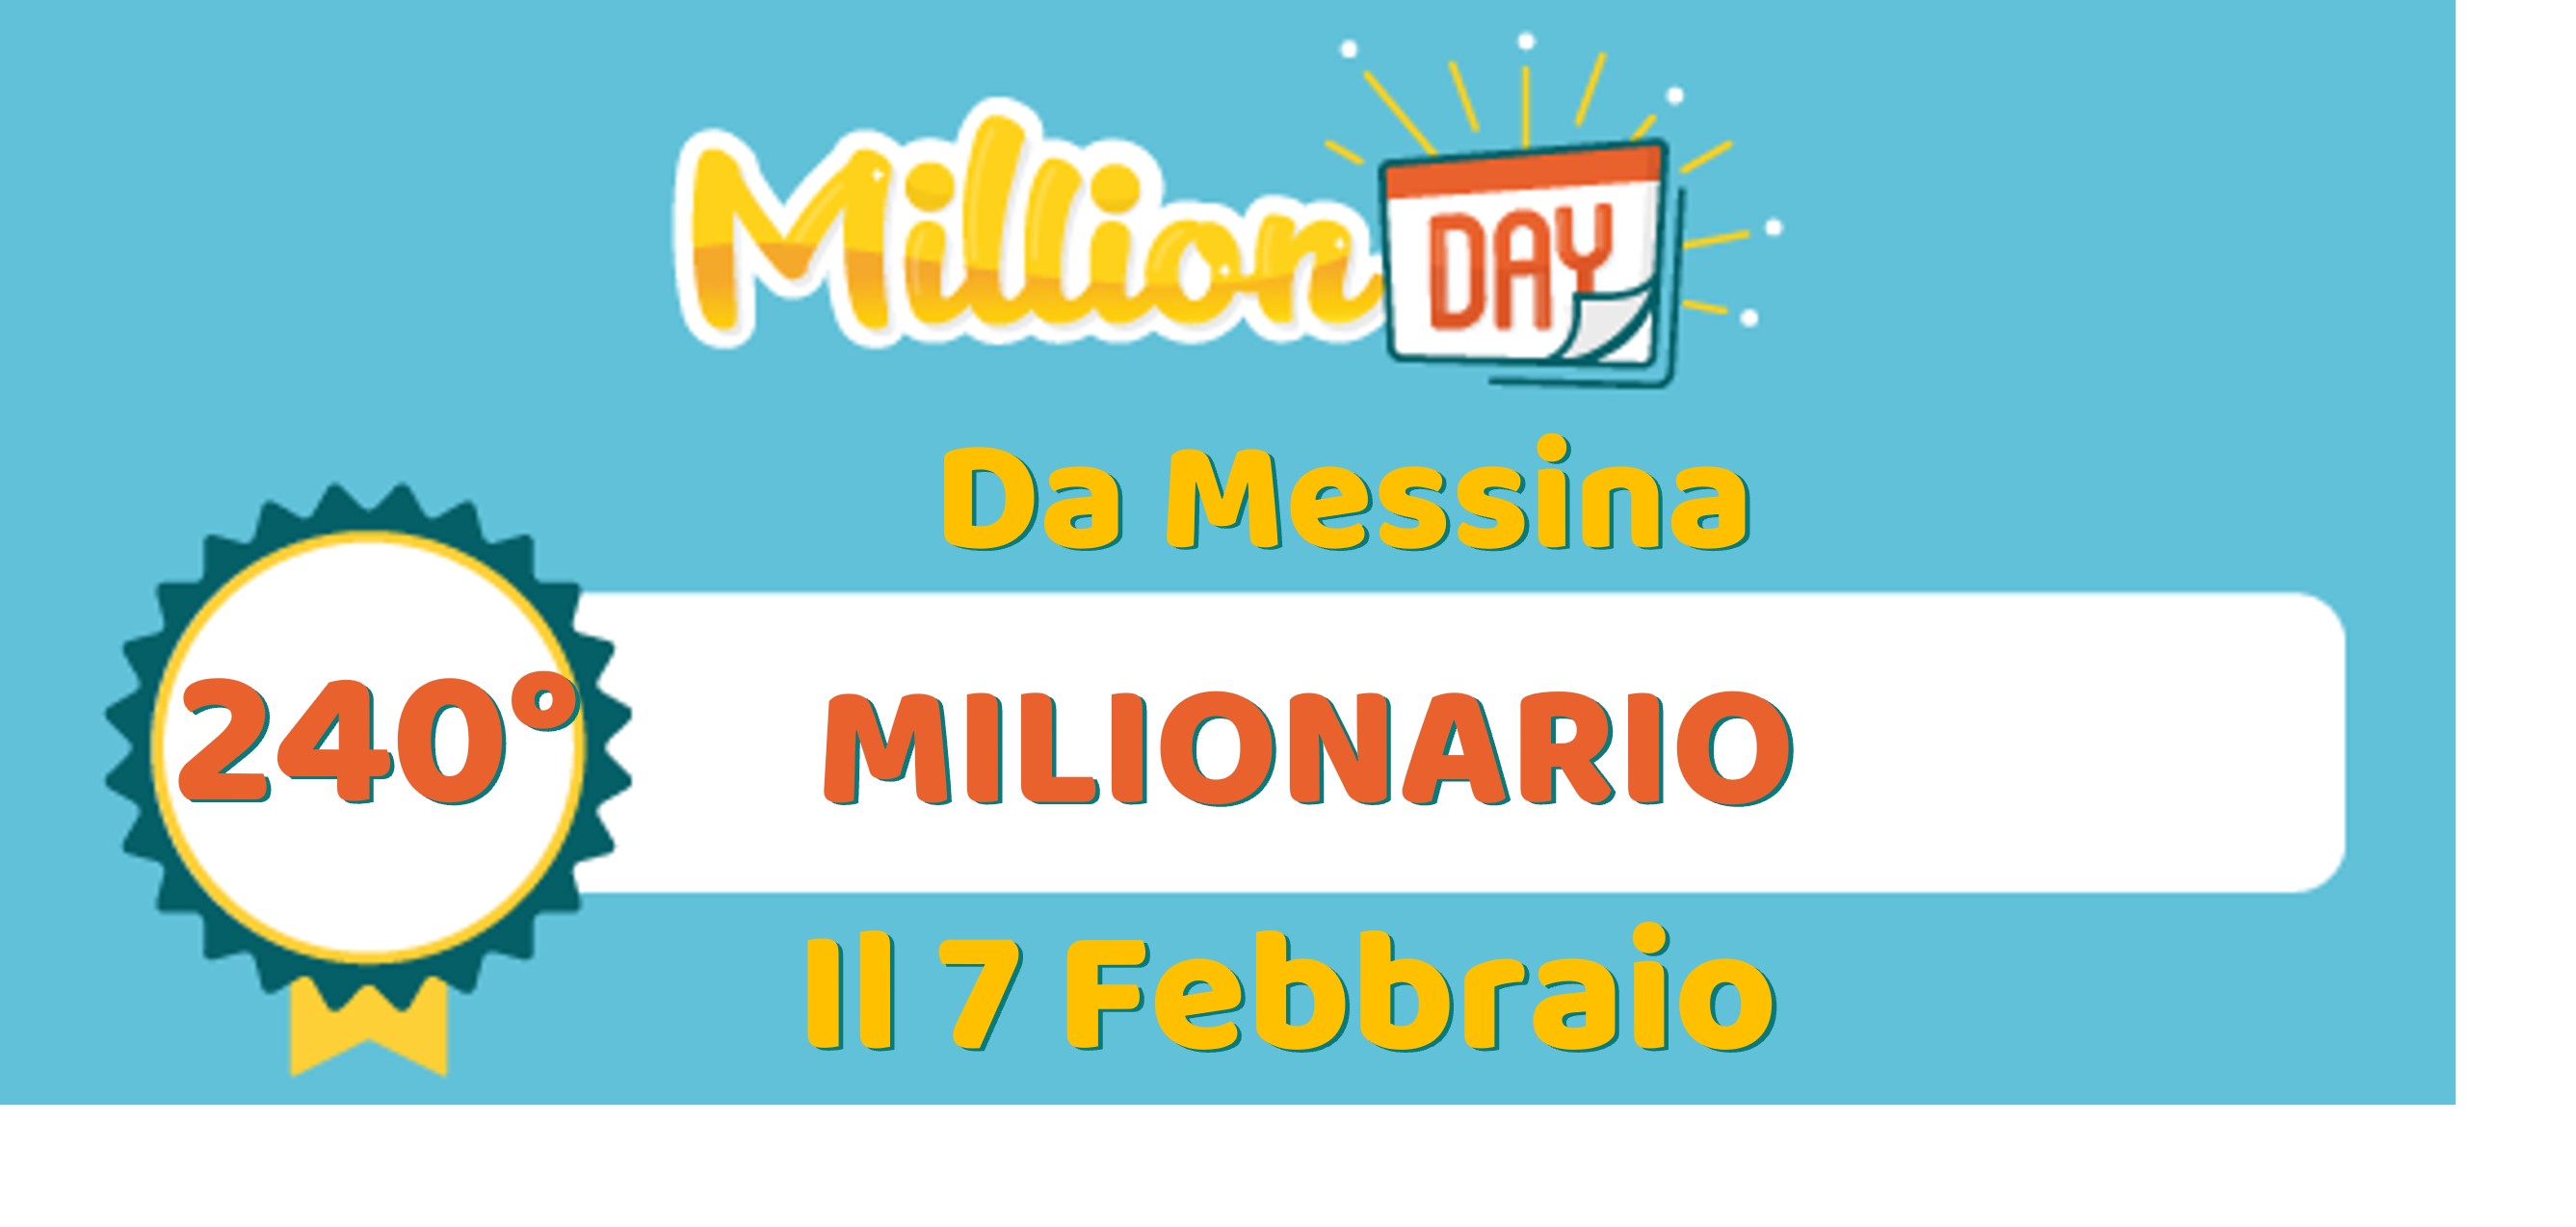 vincita MillionDAY da Messina